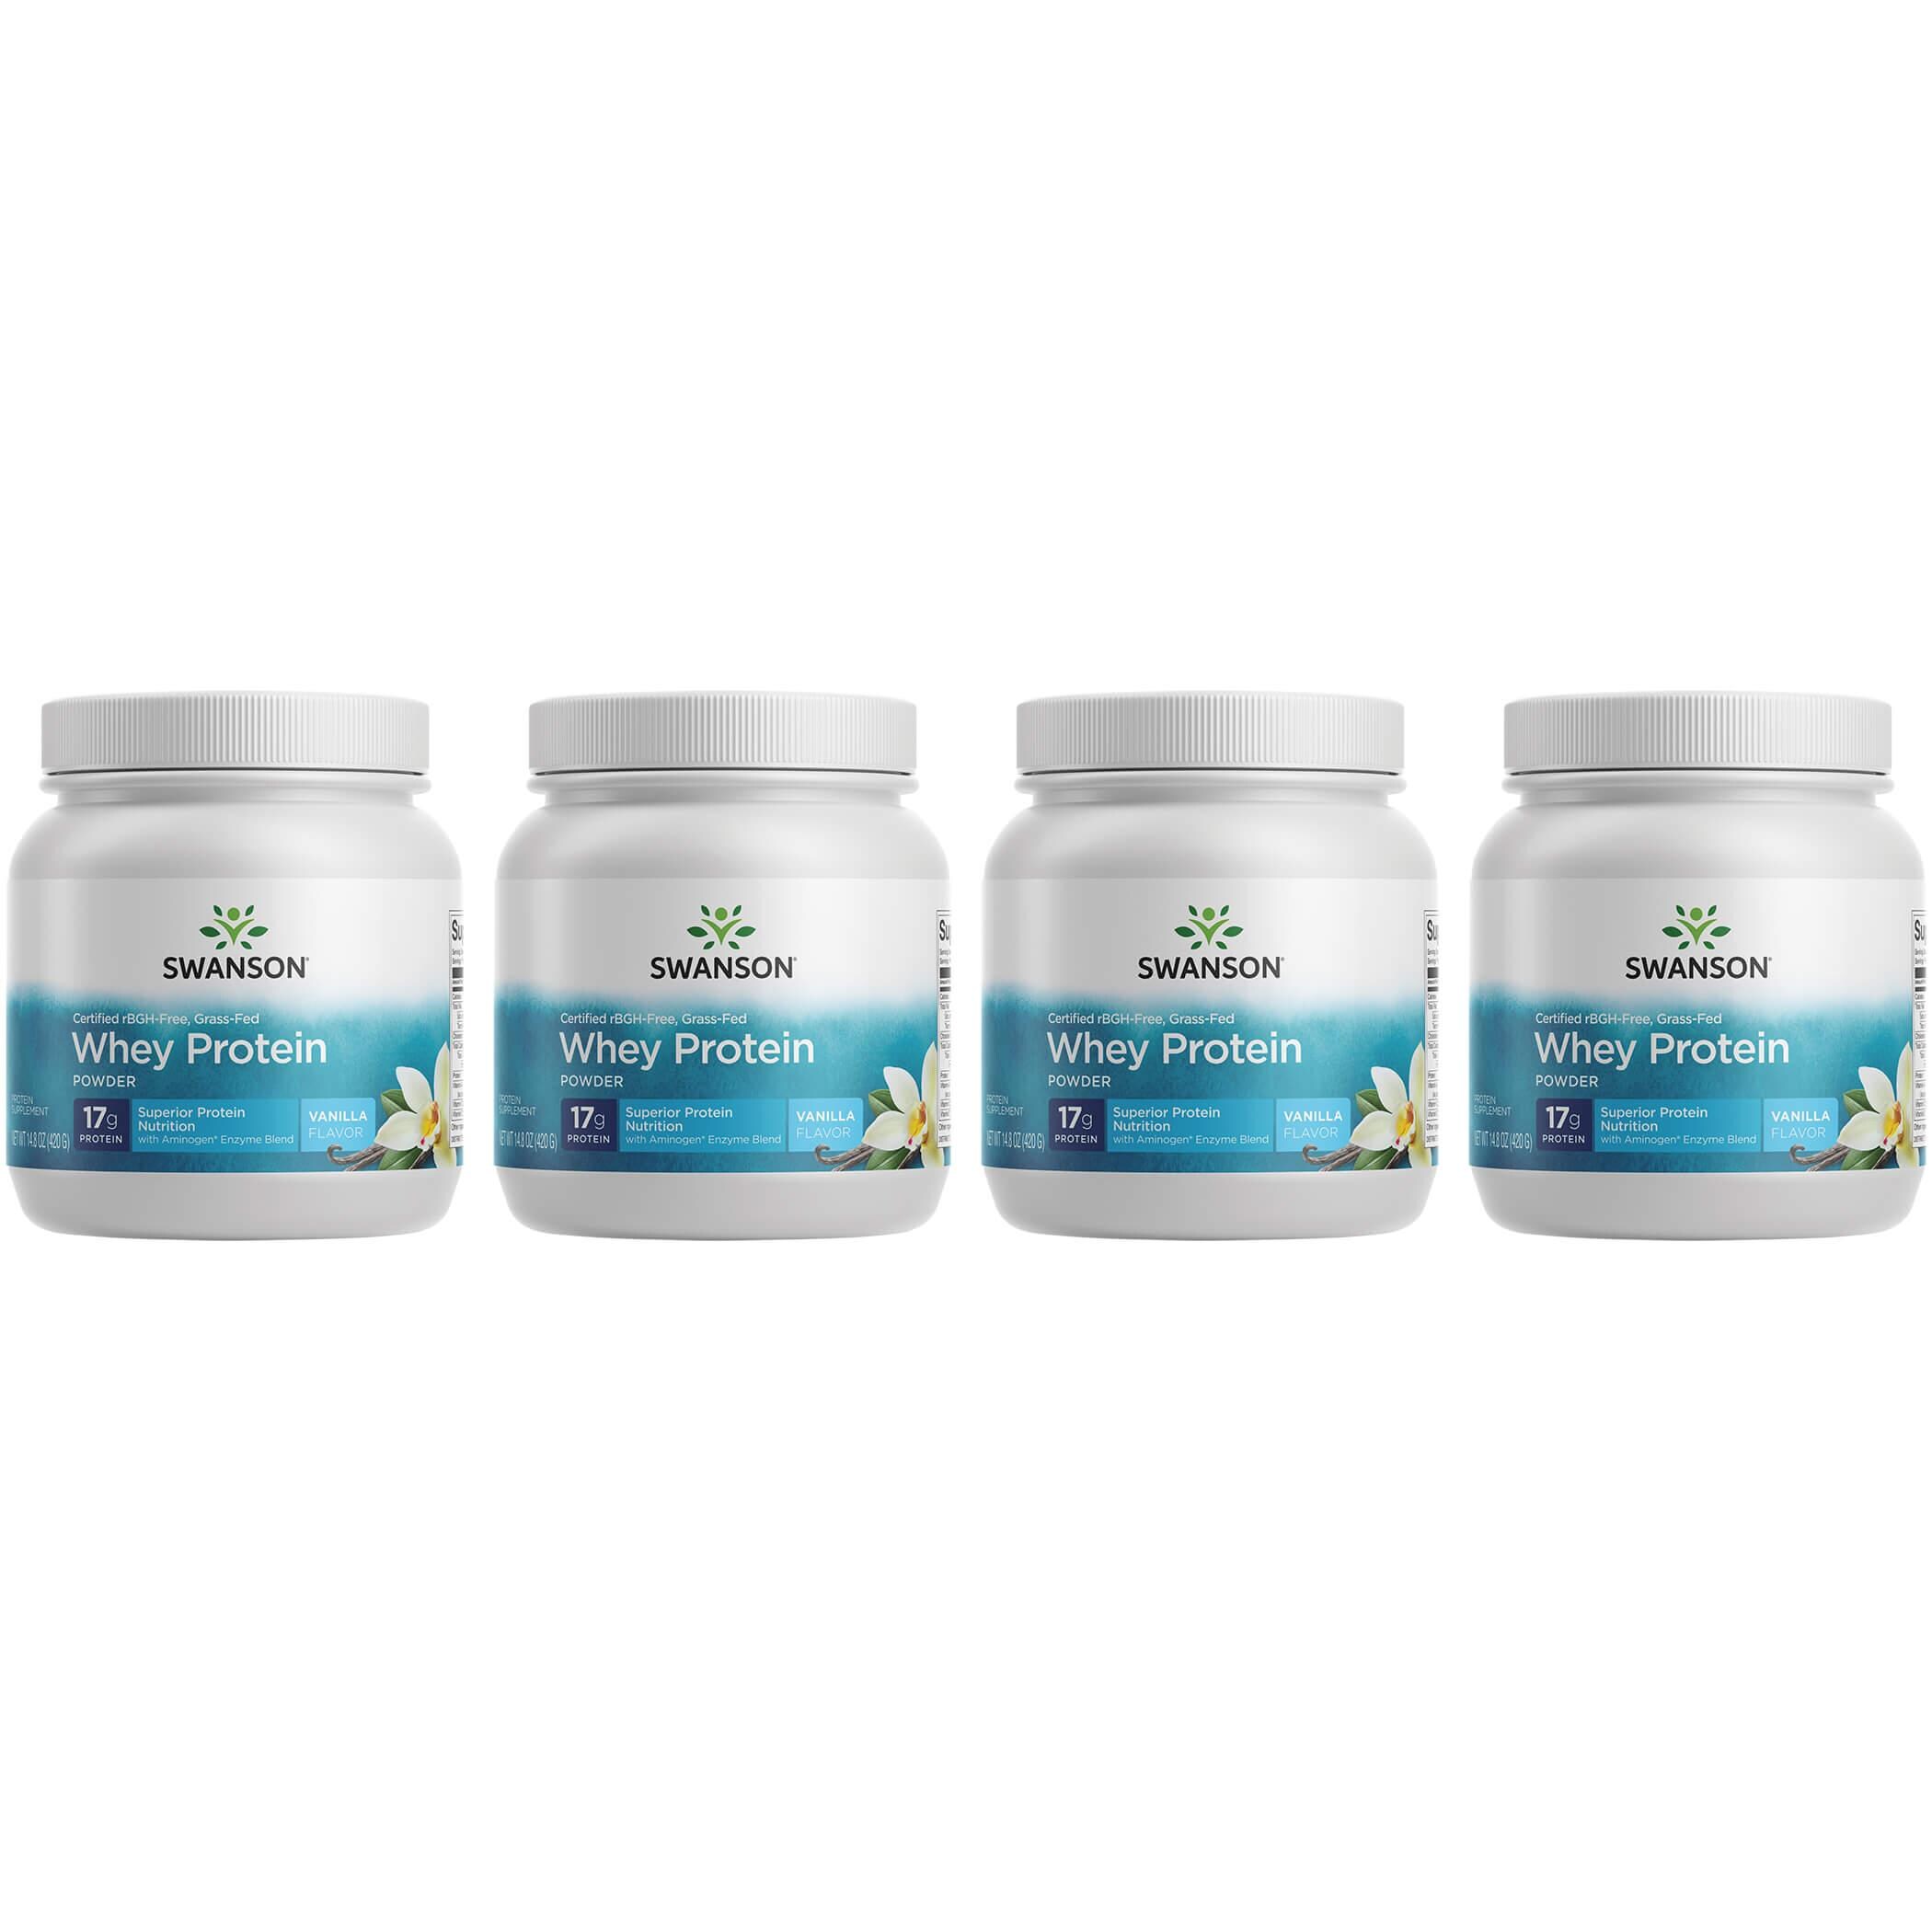 Swanson Ultra Certified rbgh-Free Grass-Fed Whey Protein Powder - Vanilla 4 Pack 14.8 oz Powder